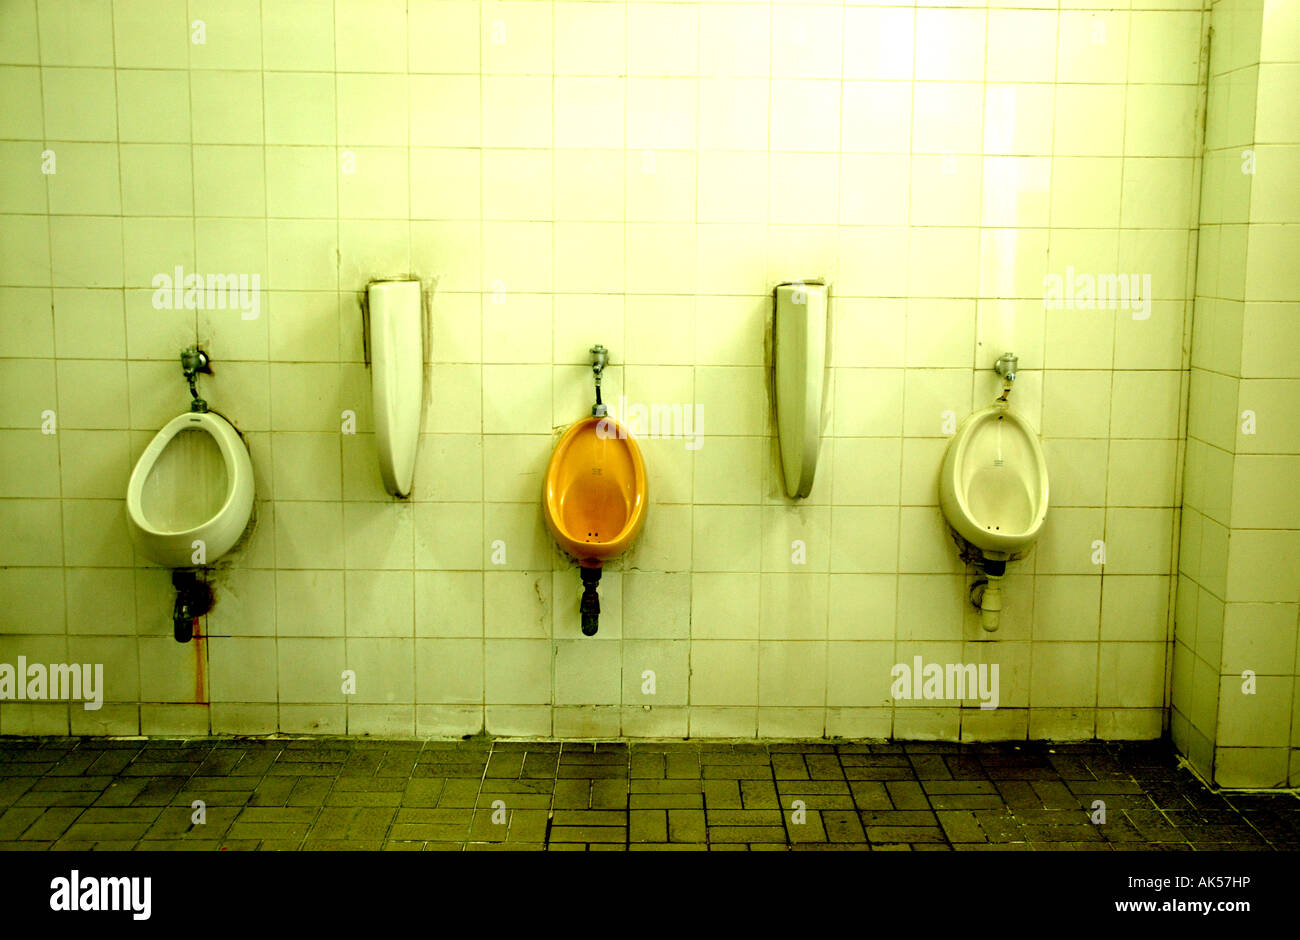 three-dirty-urinals-in-a-public-toilet-AK57HP.jpg